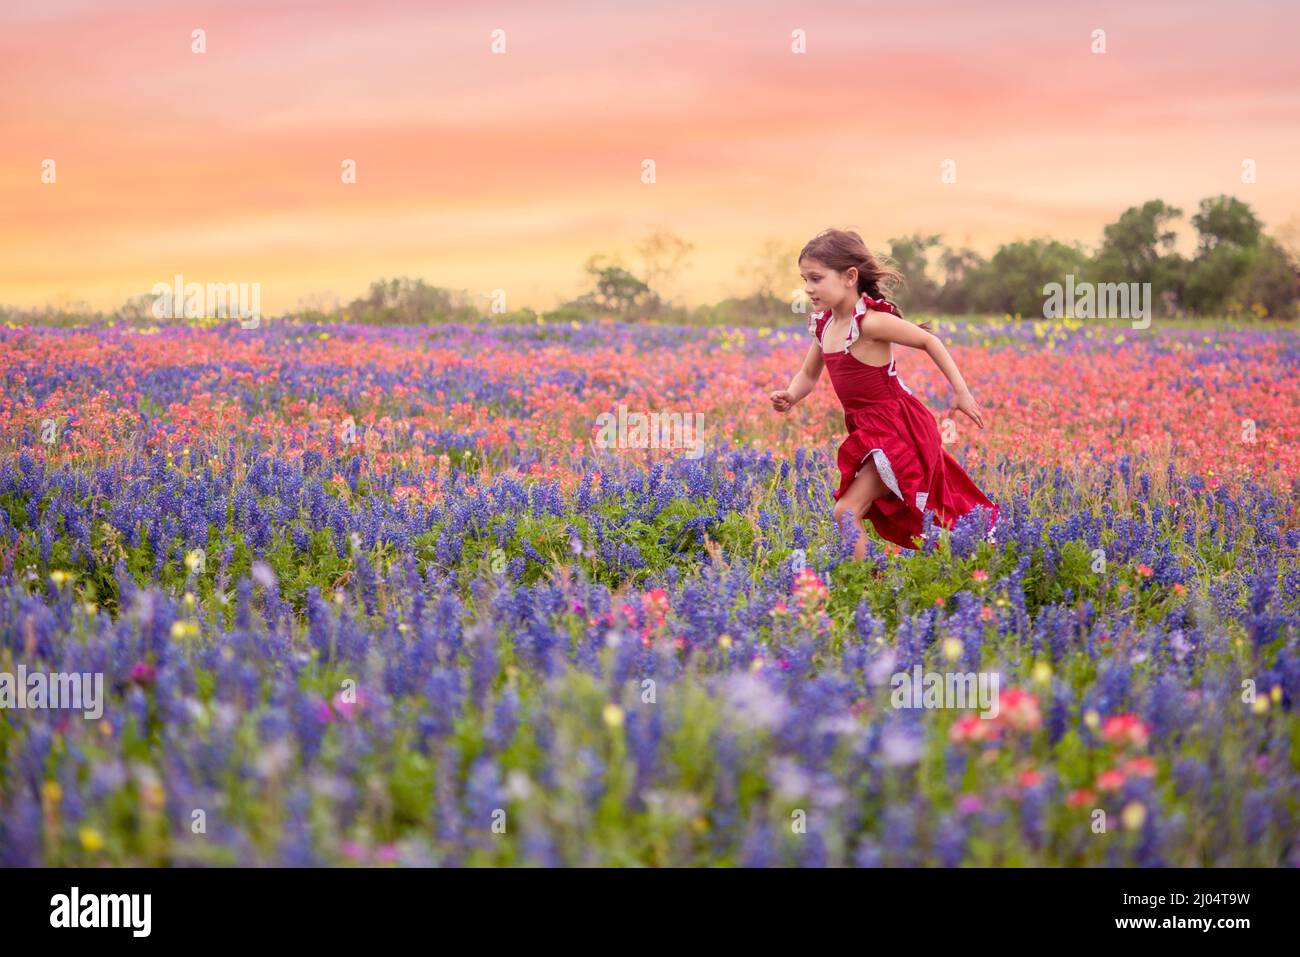 Girl In Red Dress Running In Texas Wildflower Field Stock Photo